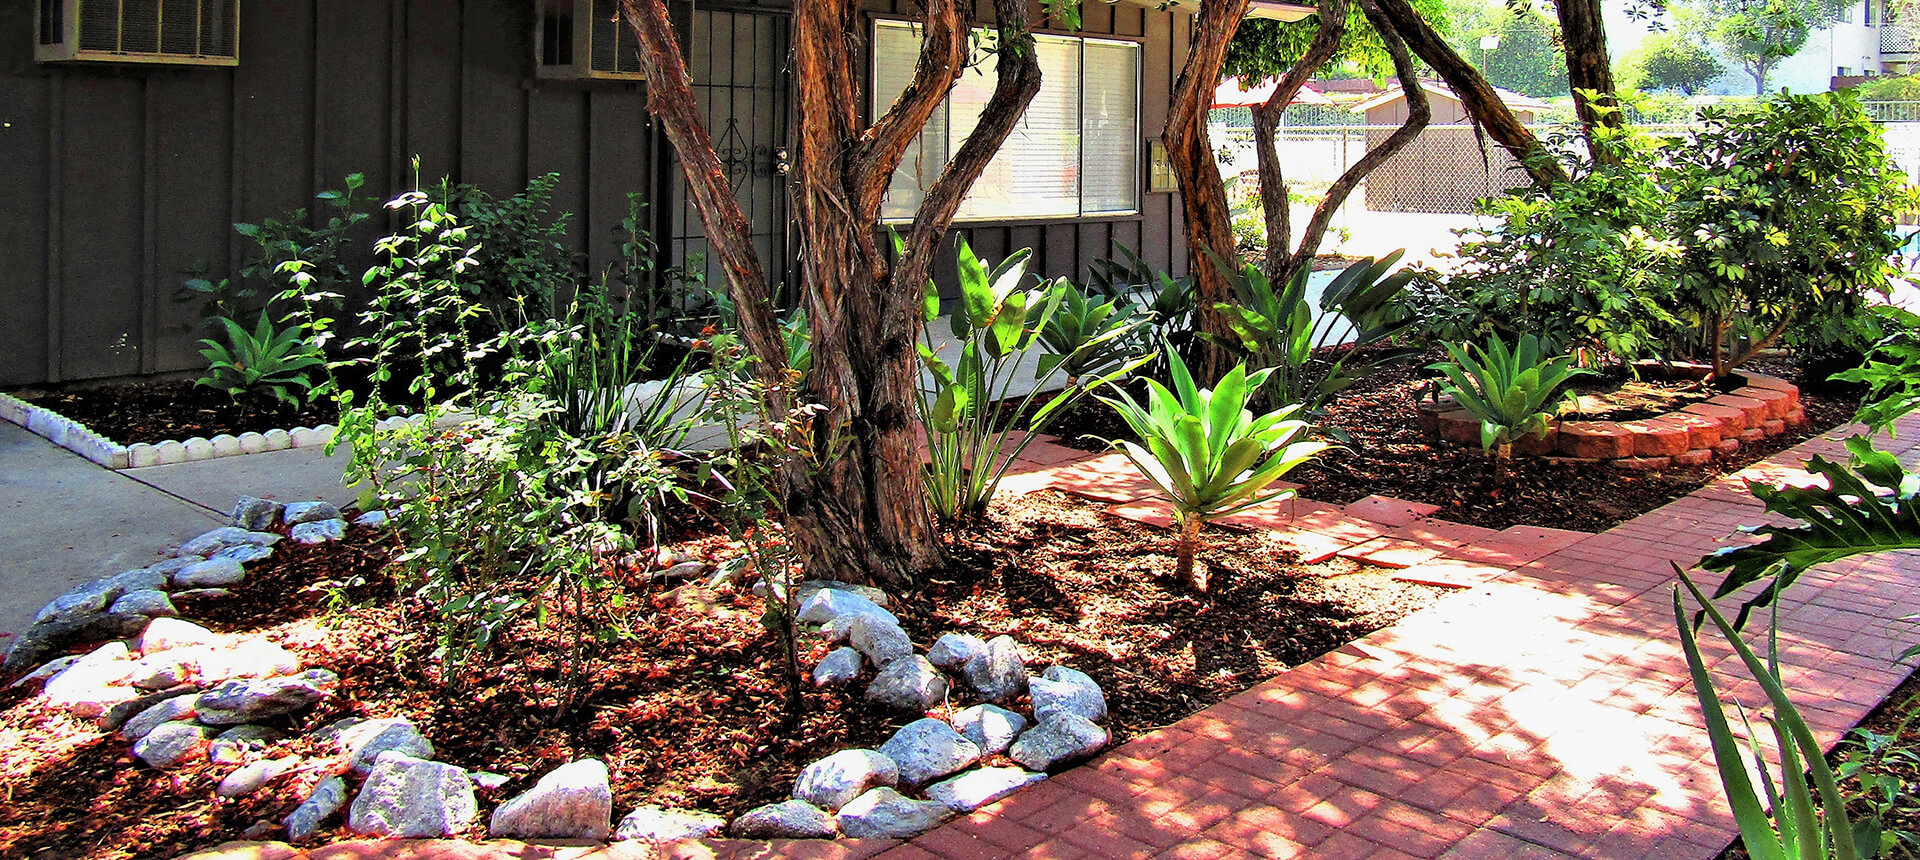 Town & Country Gardens Apartments - Apartments in El Cajon, CA